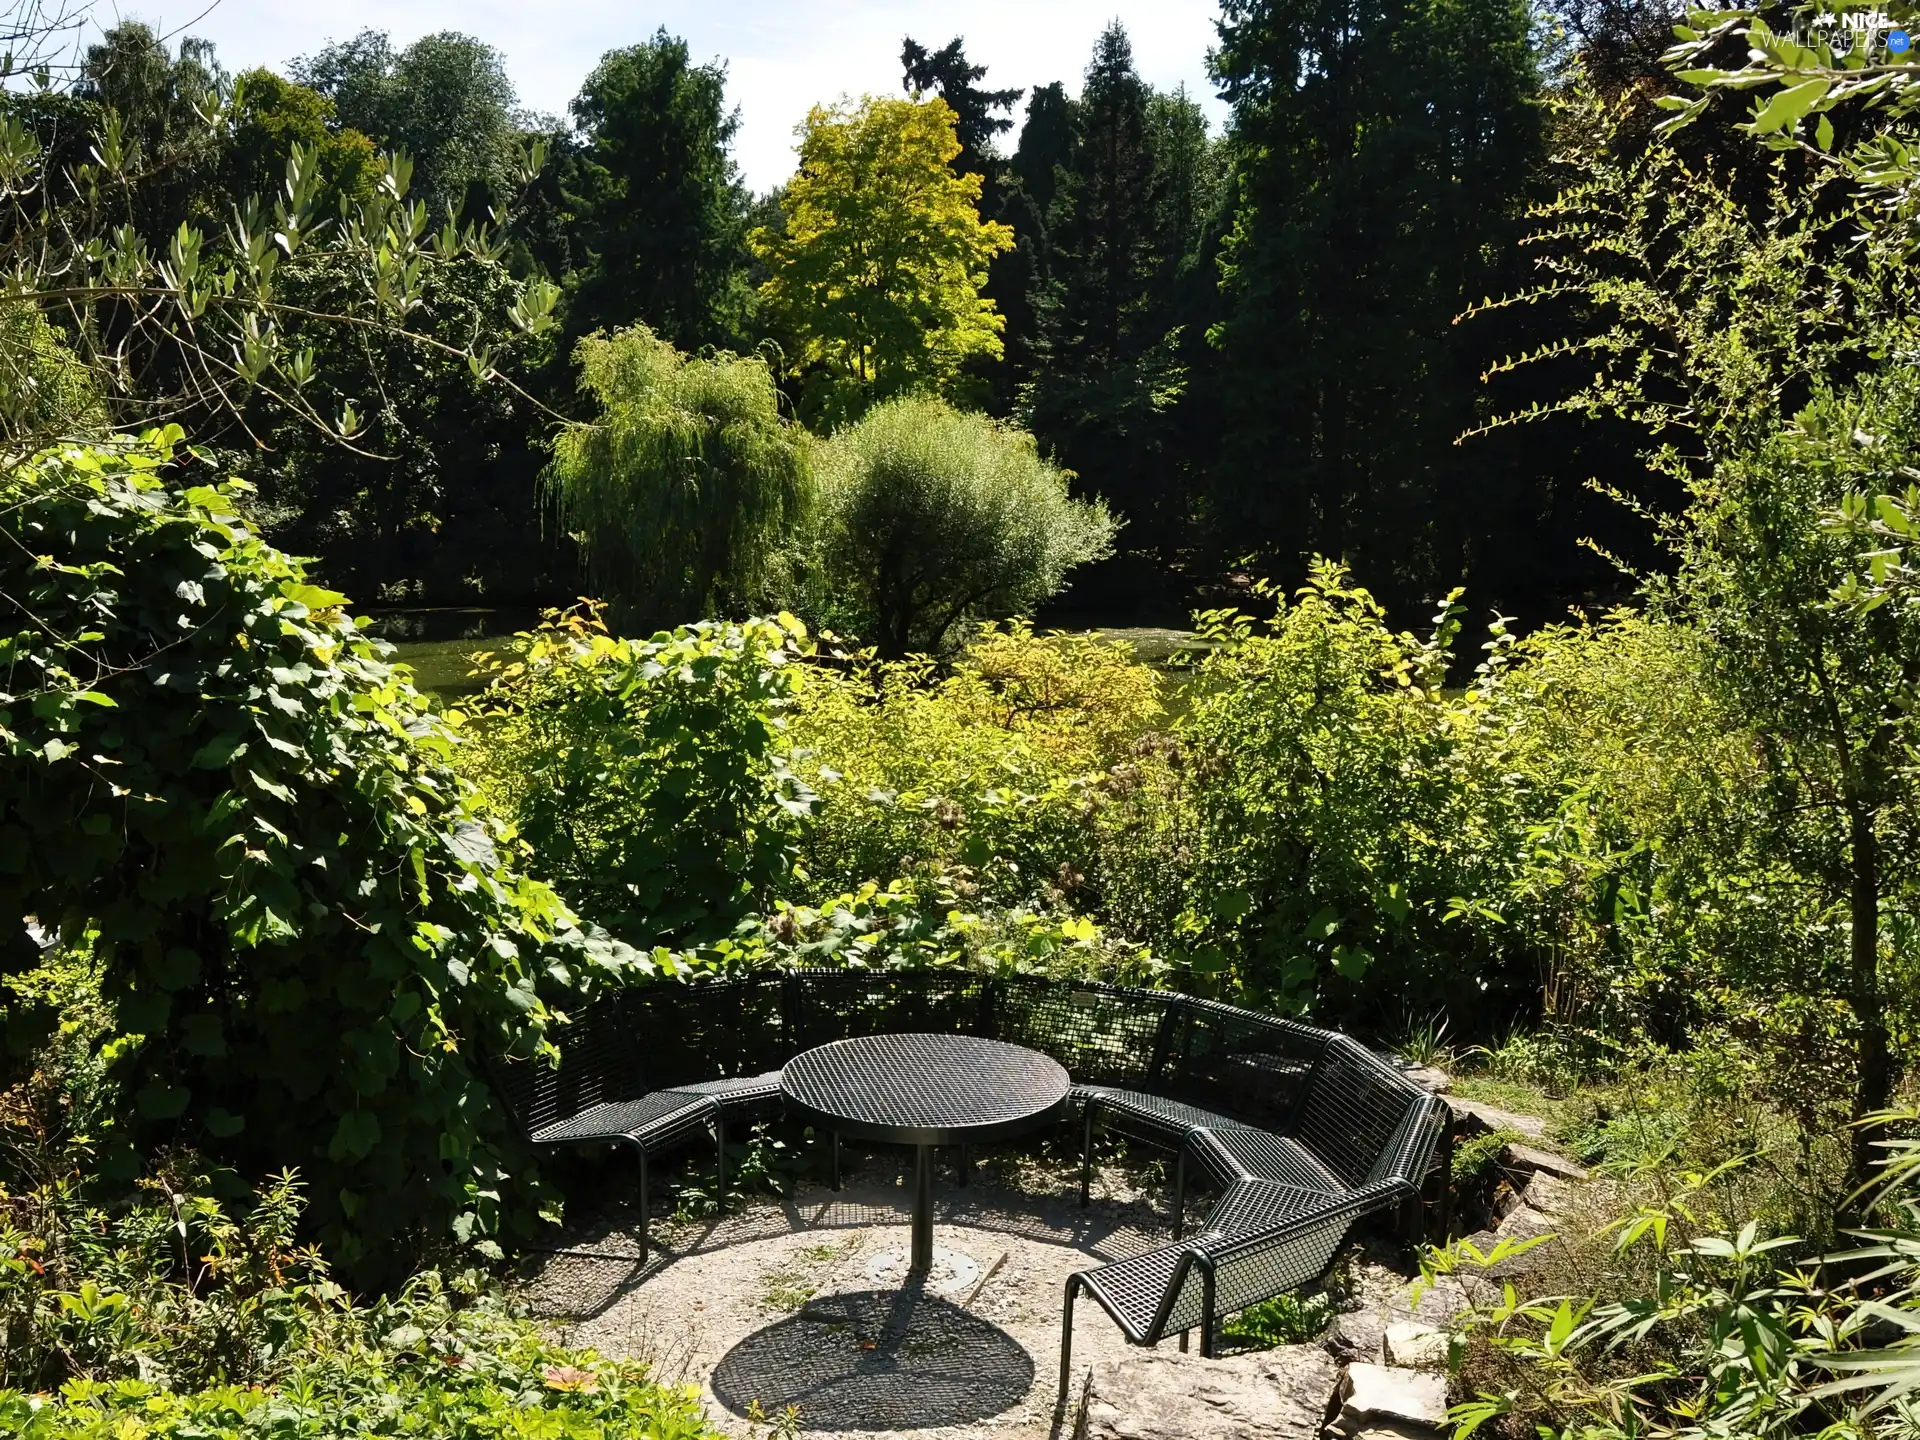 Garden, Bench, relaxation, green